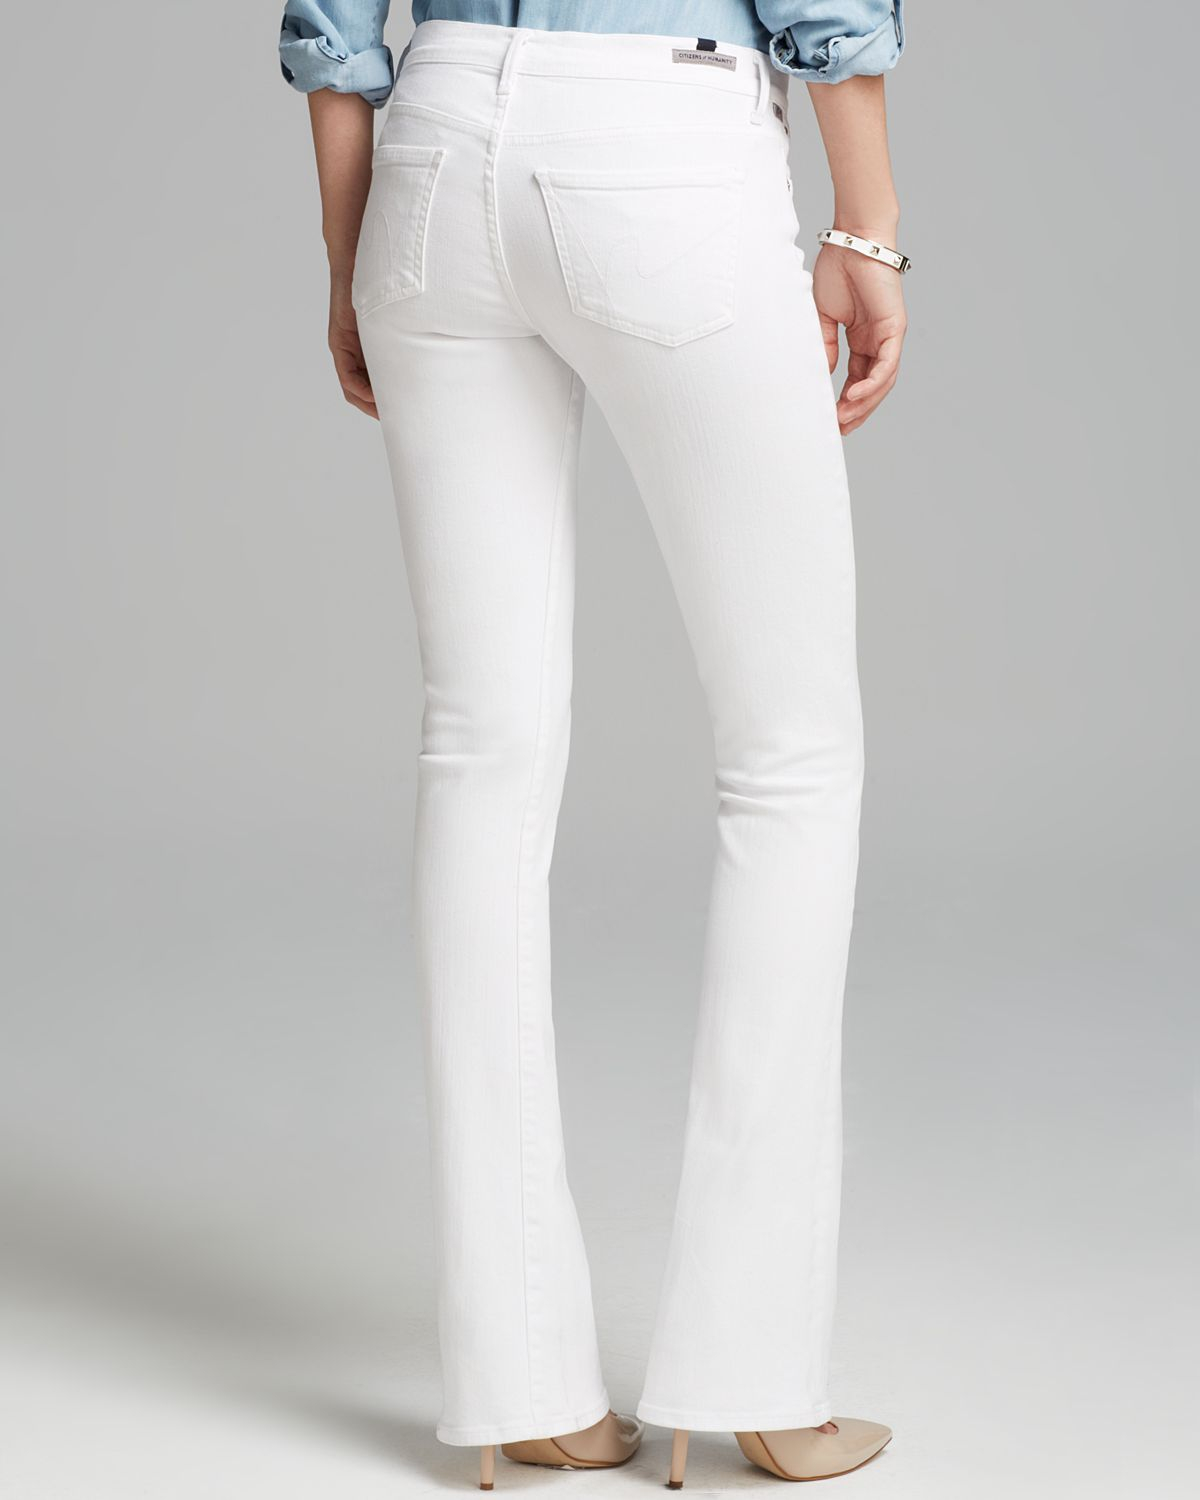 white bootleg jeans